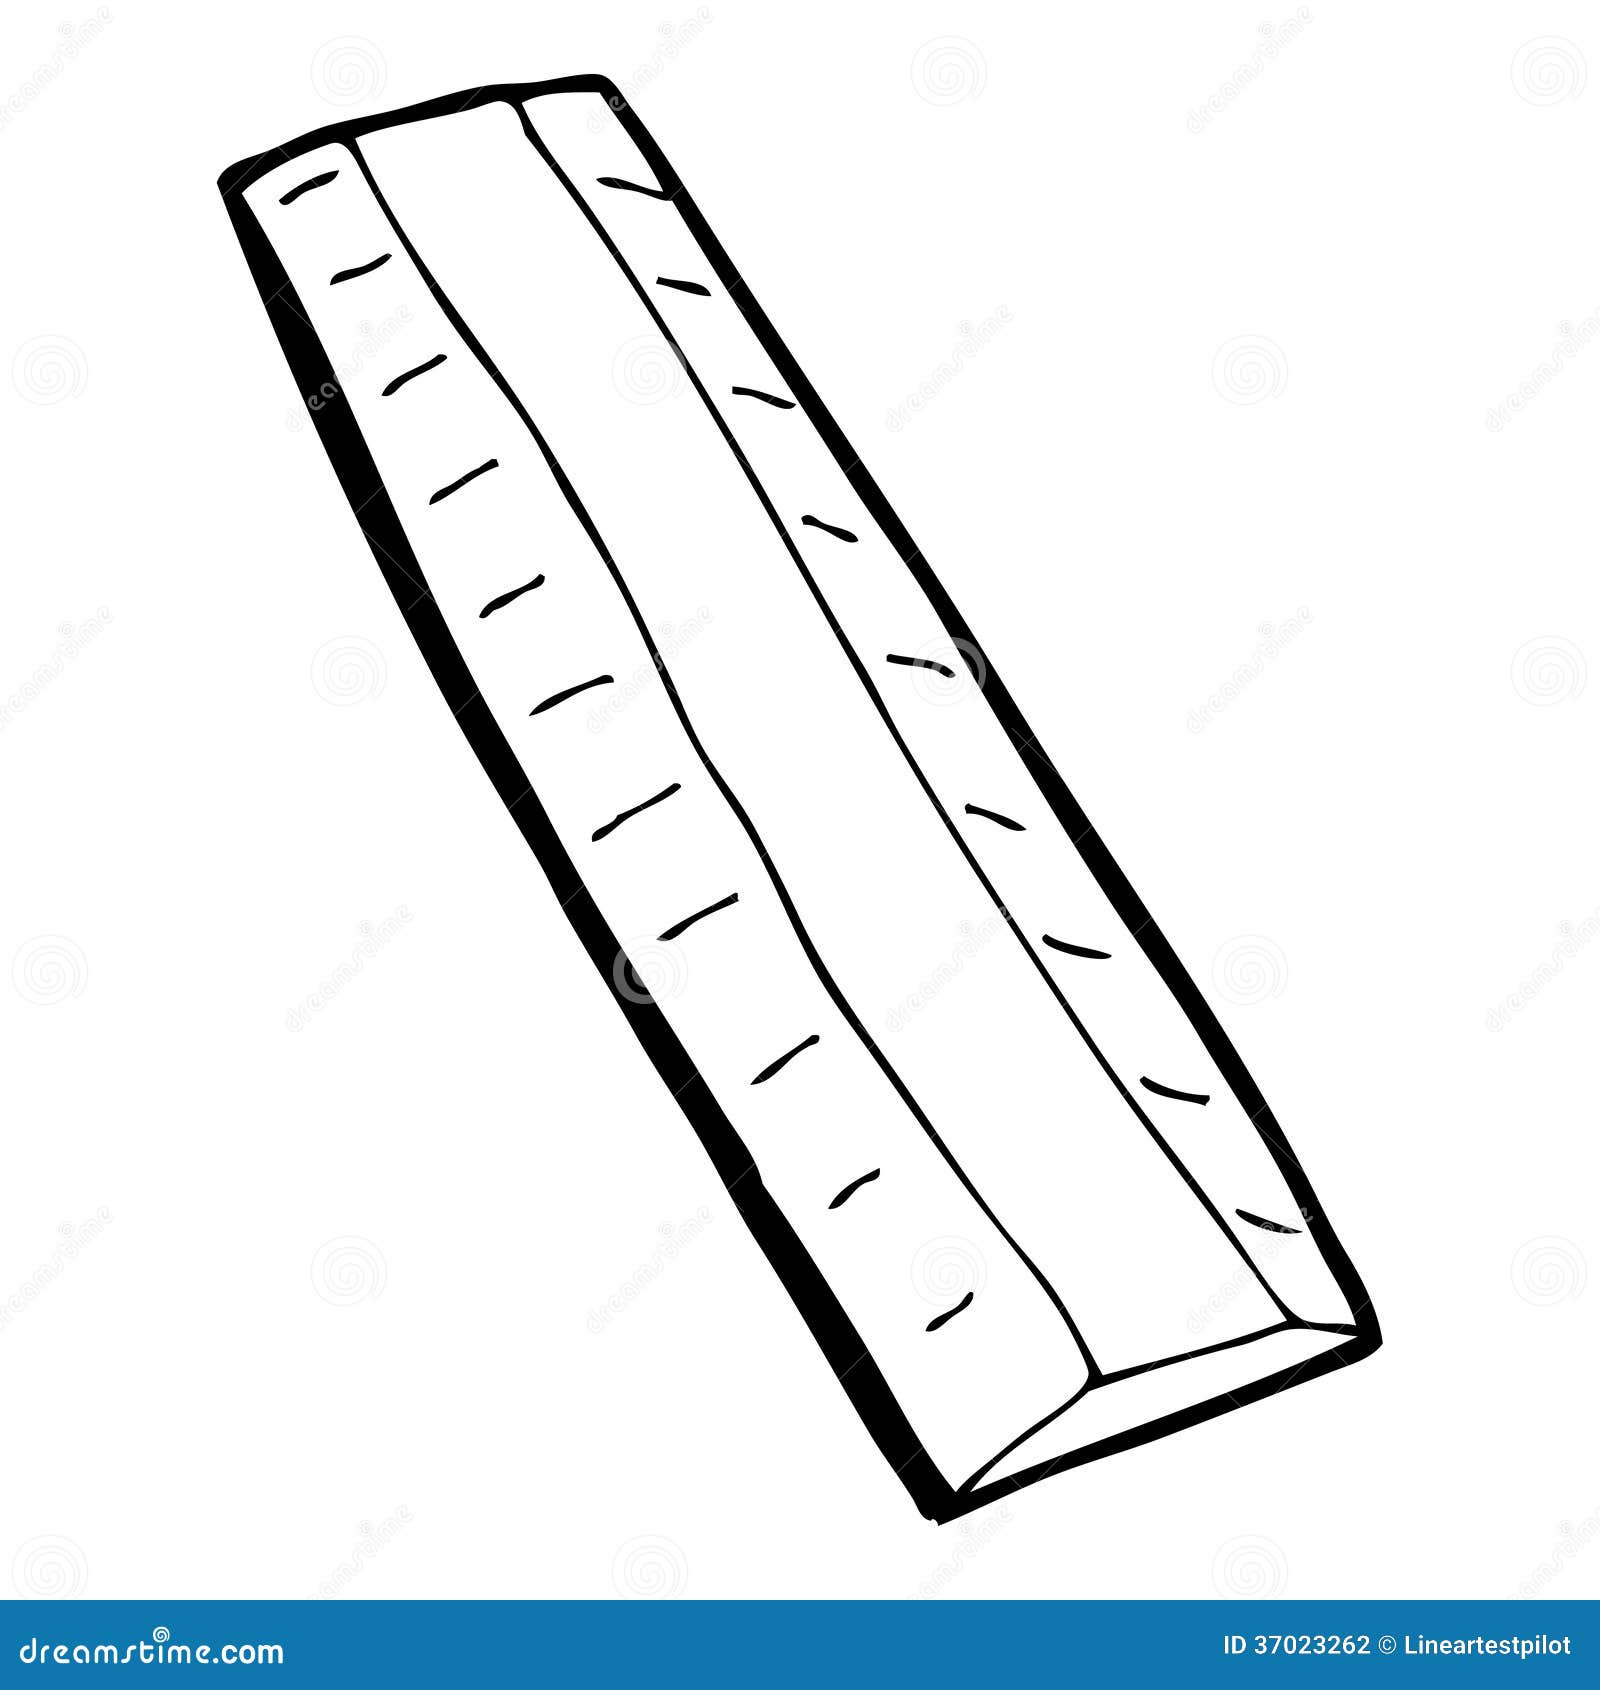 cartoon wooden ruler stock illustration illustration of doodle 37023262